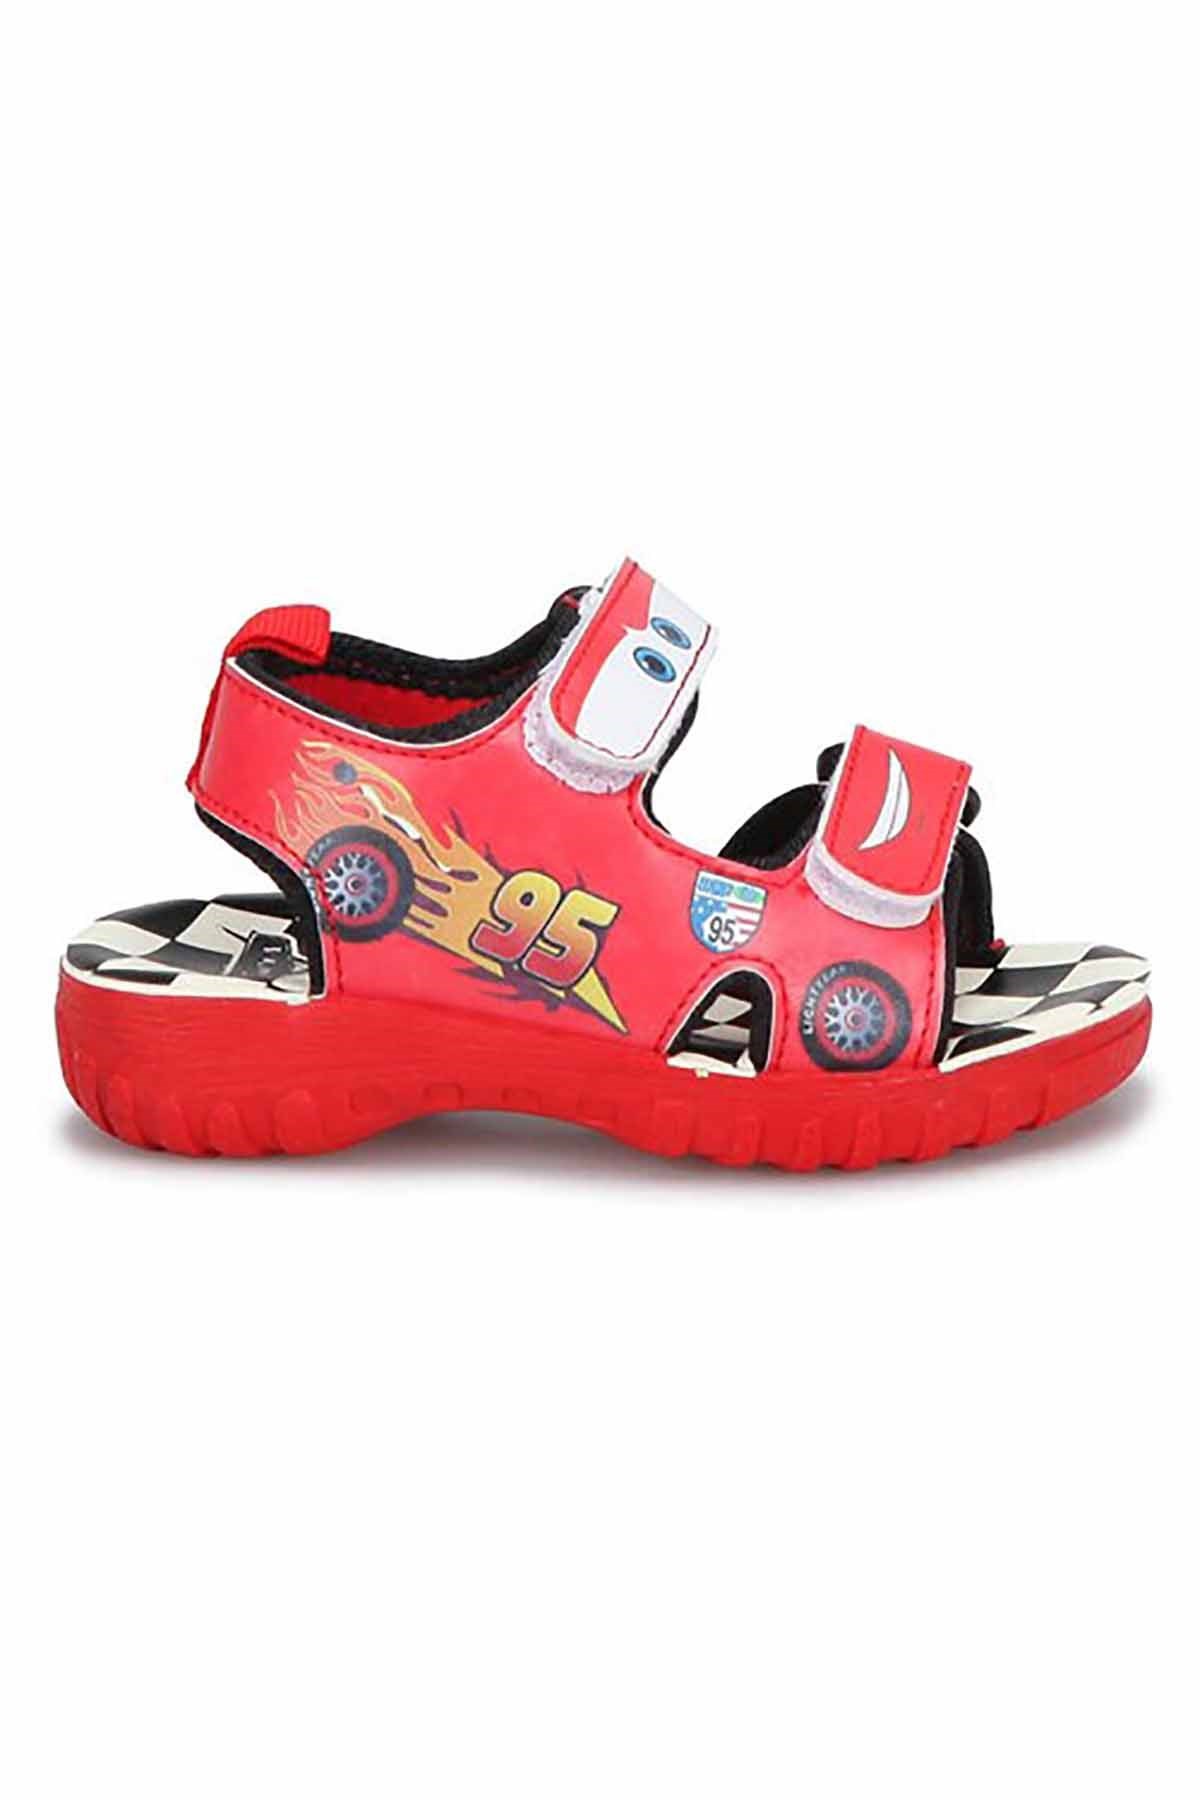 Gigi Cars Sandalet Kırmızı No: 25